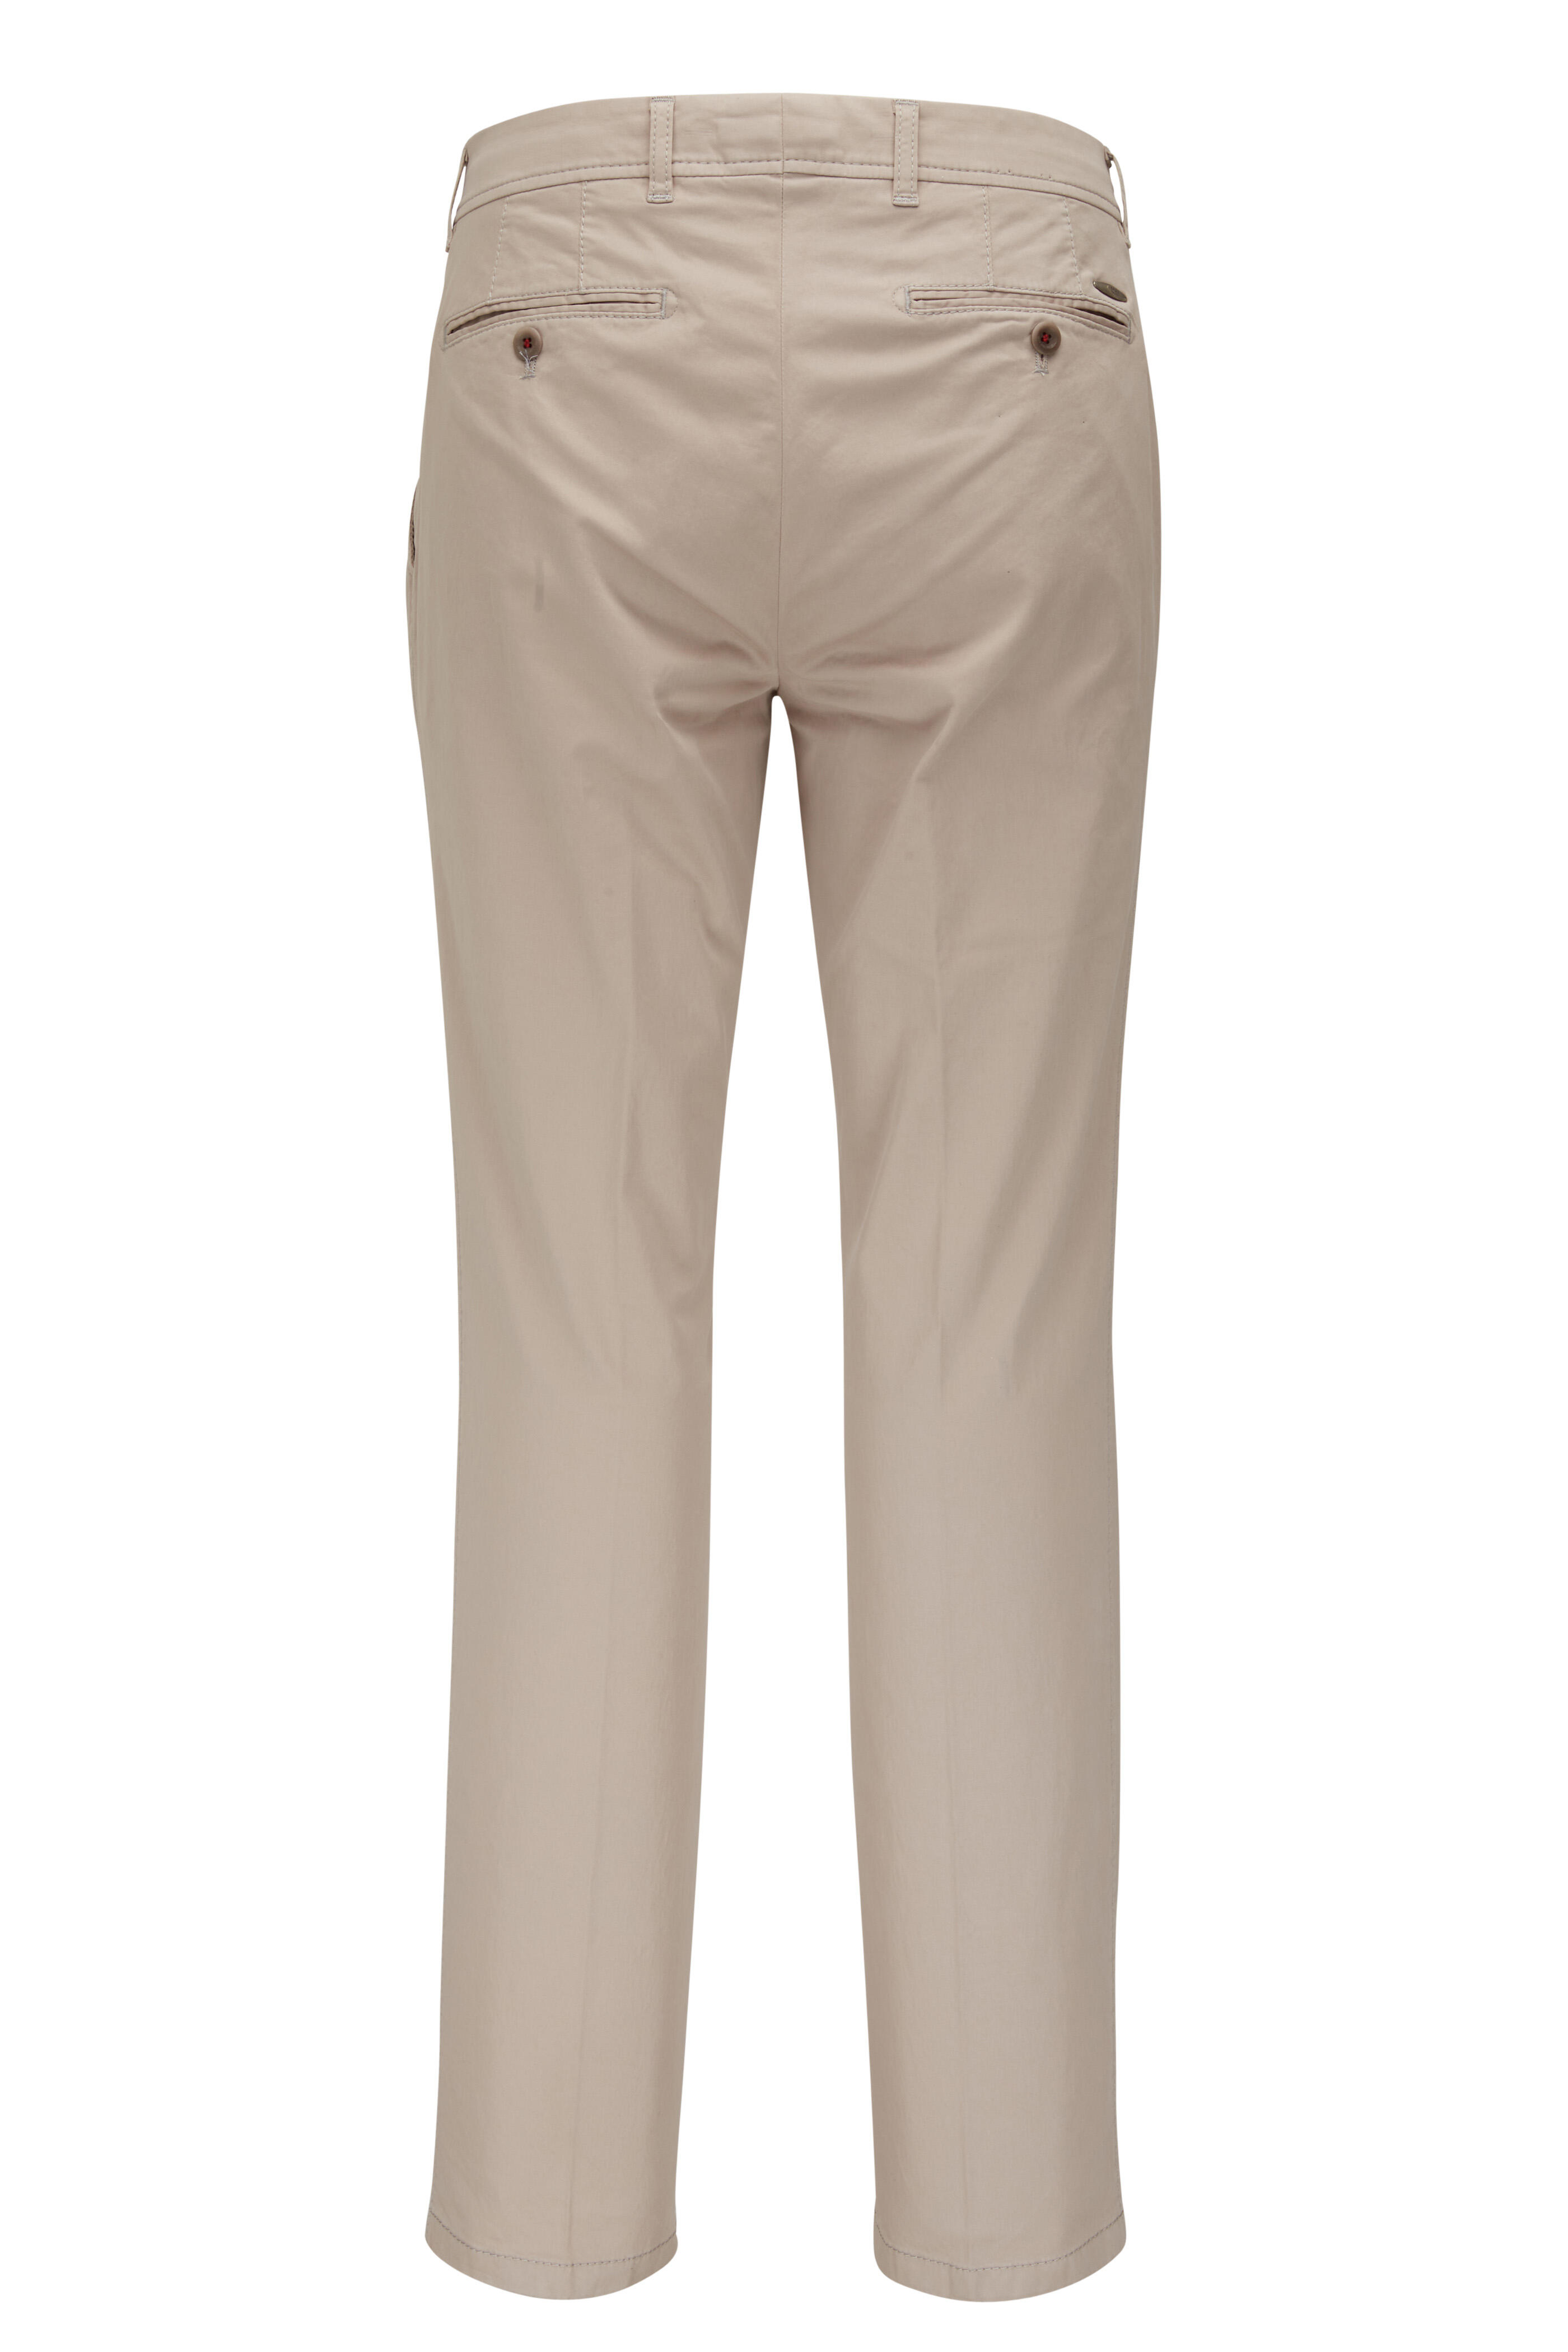 Brax - Evans Beige Brushed Cotton Flat Front Pant